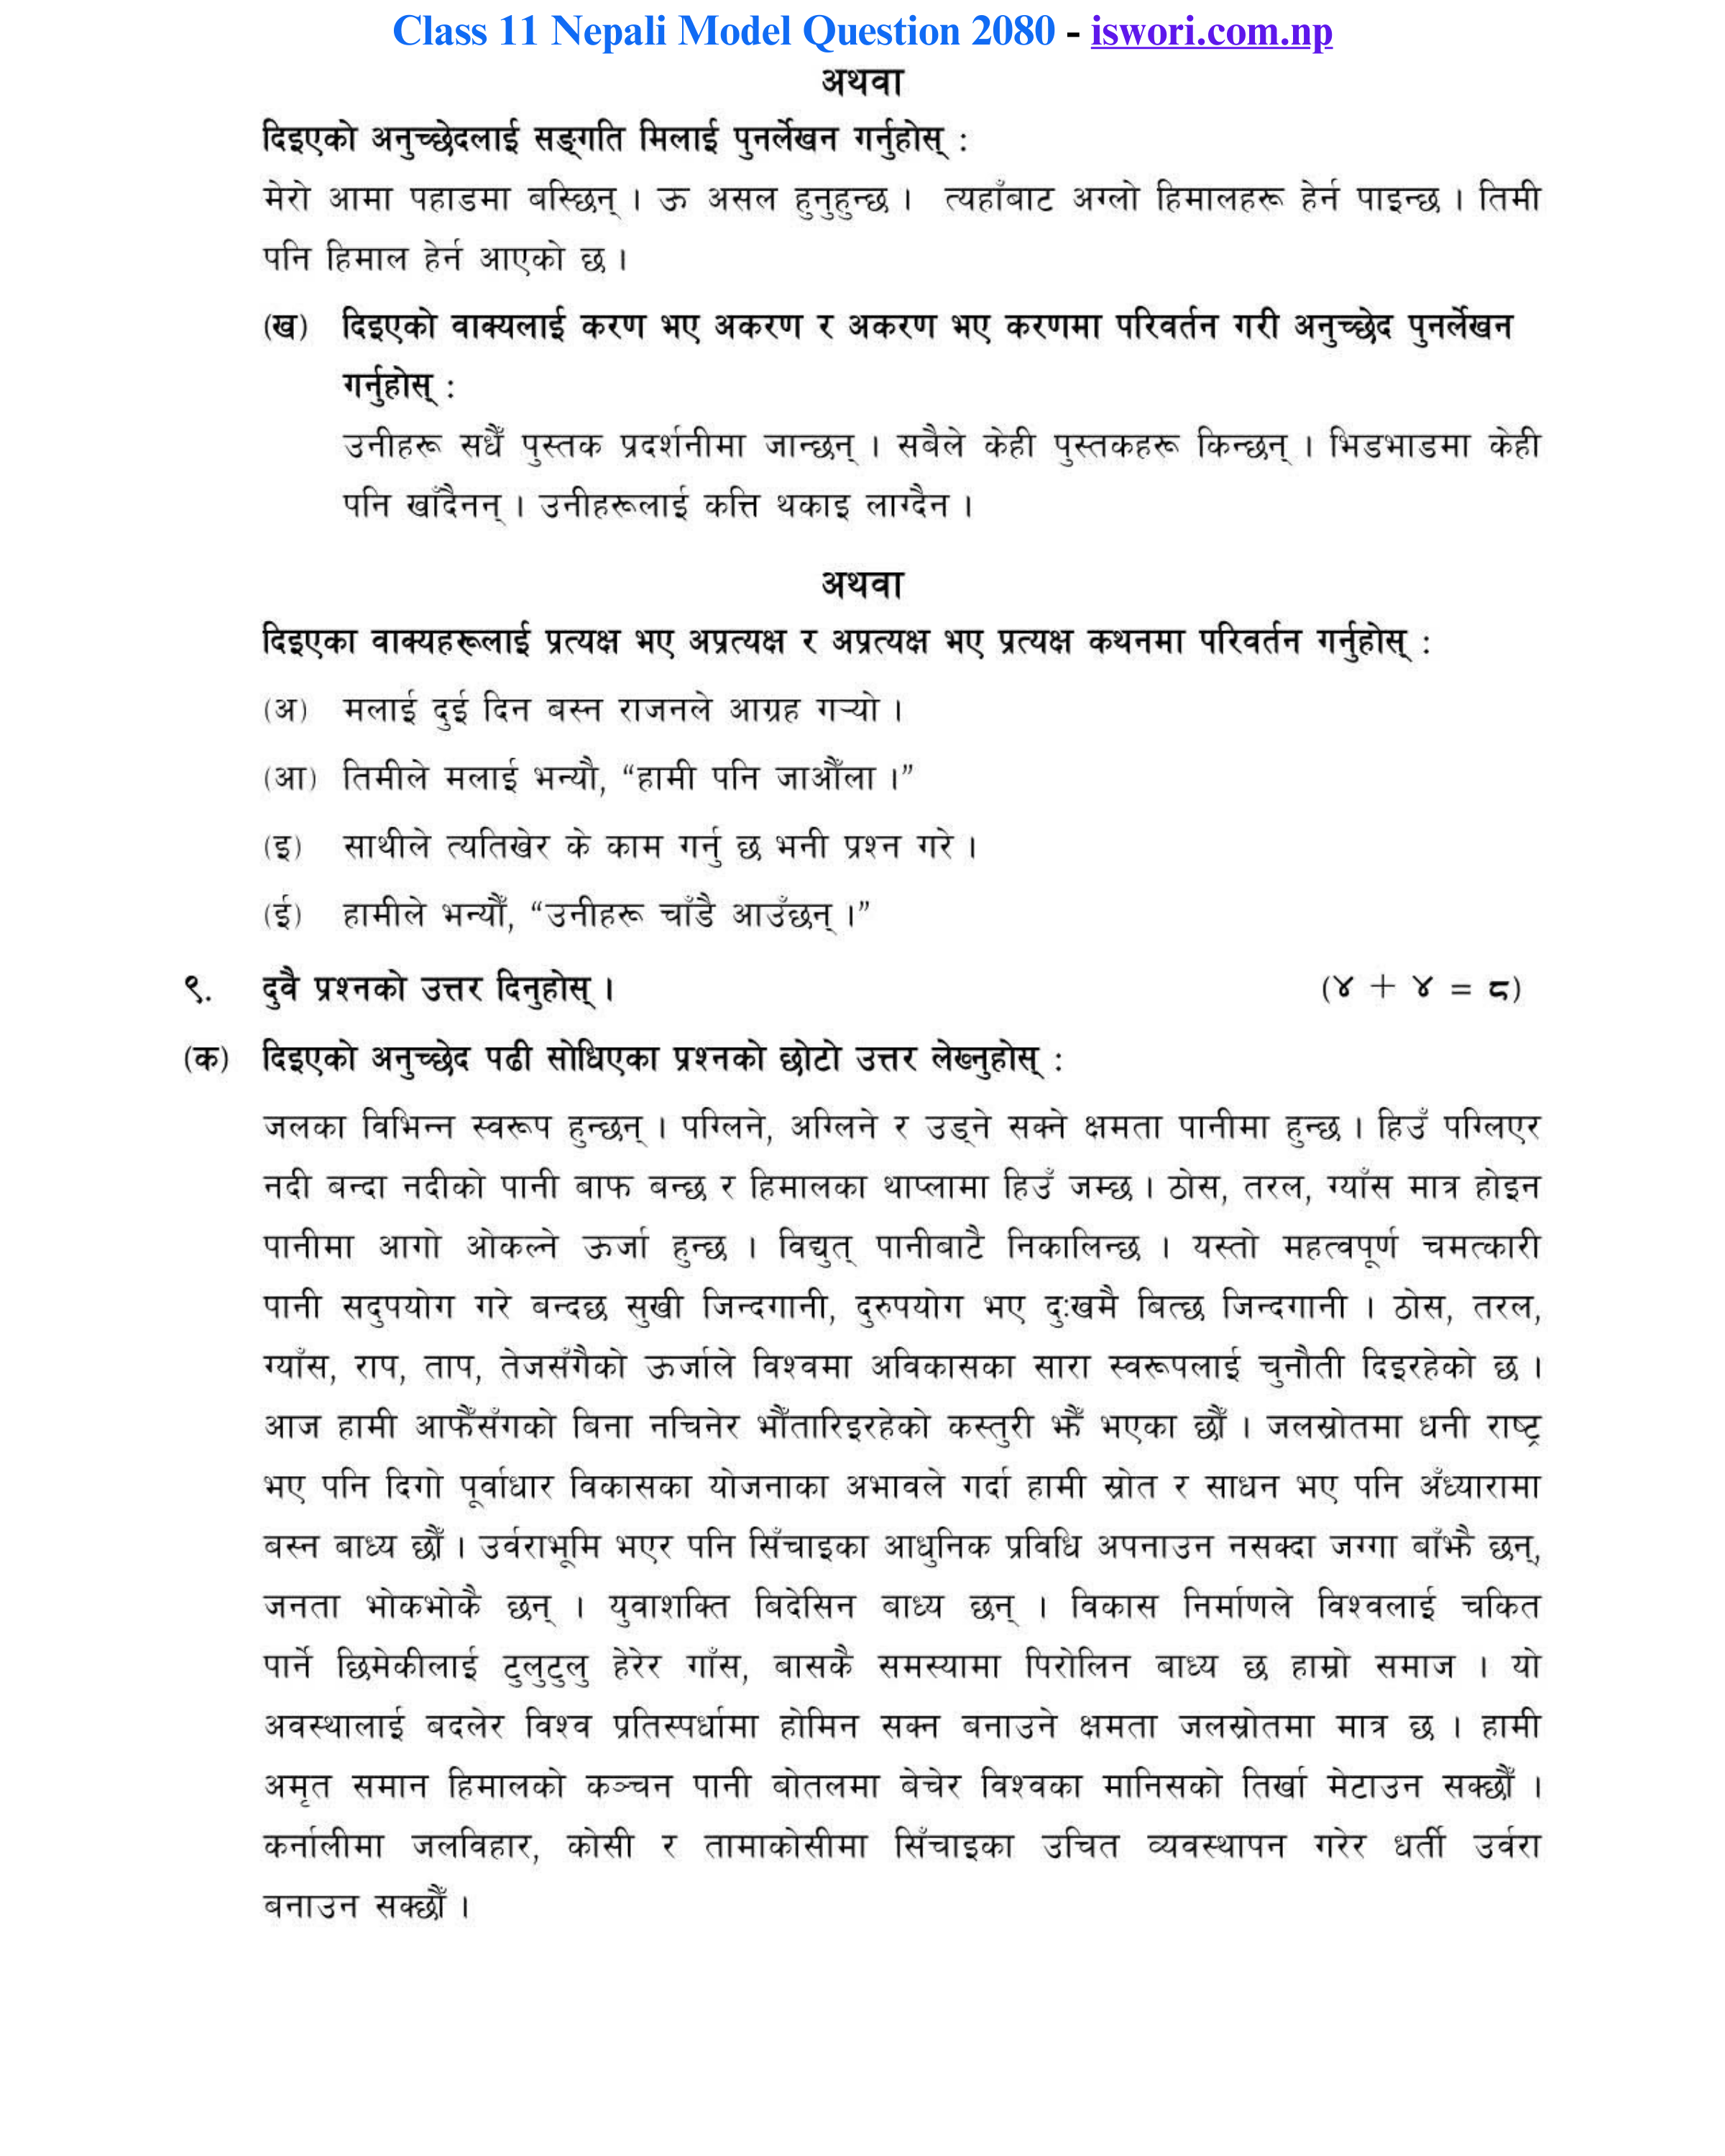 NEB Class 11 Nepali Model Question 2080 PDF